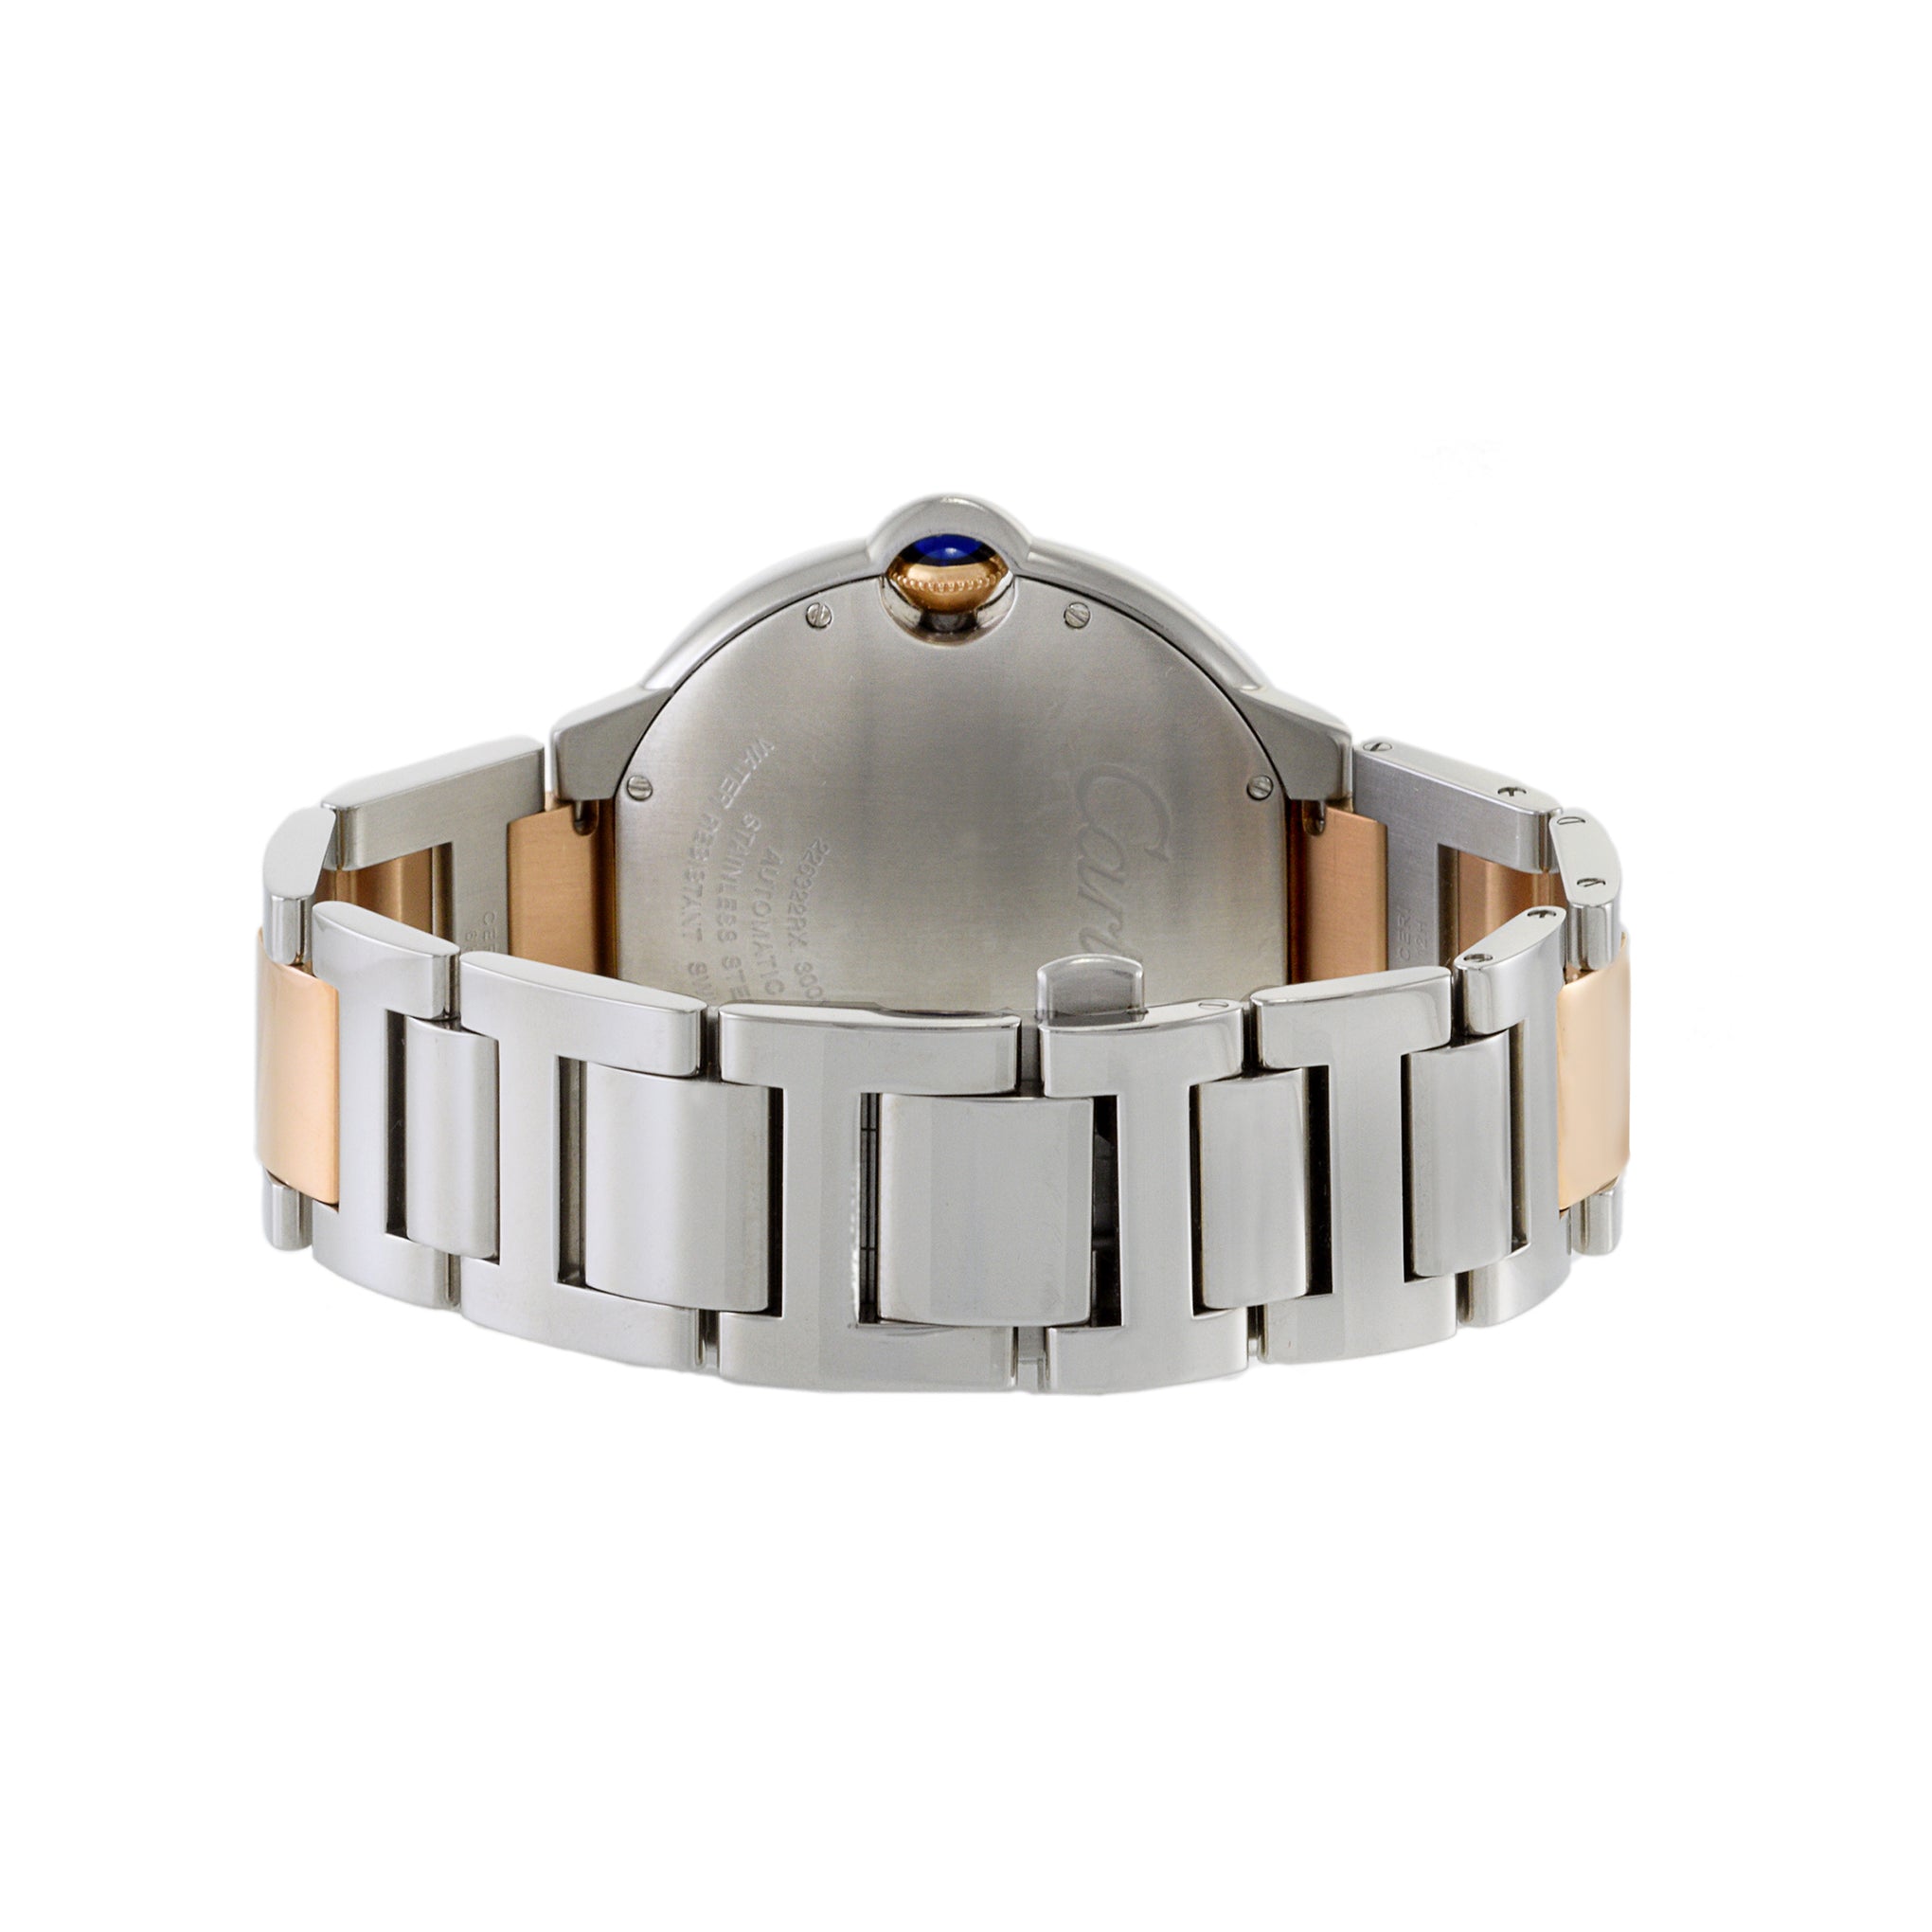 Cartier Ballon Bleu 18KT Rose Gold and Stainless Steel Brown Dial Watch W6920032